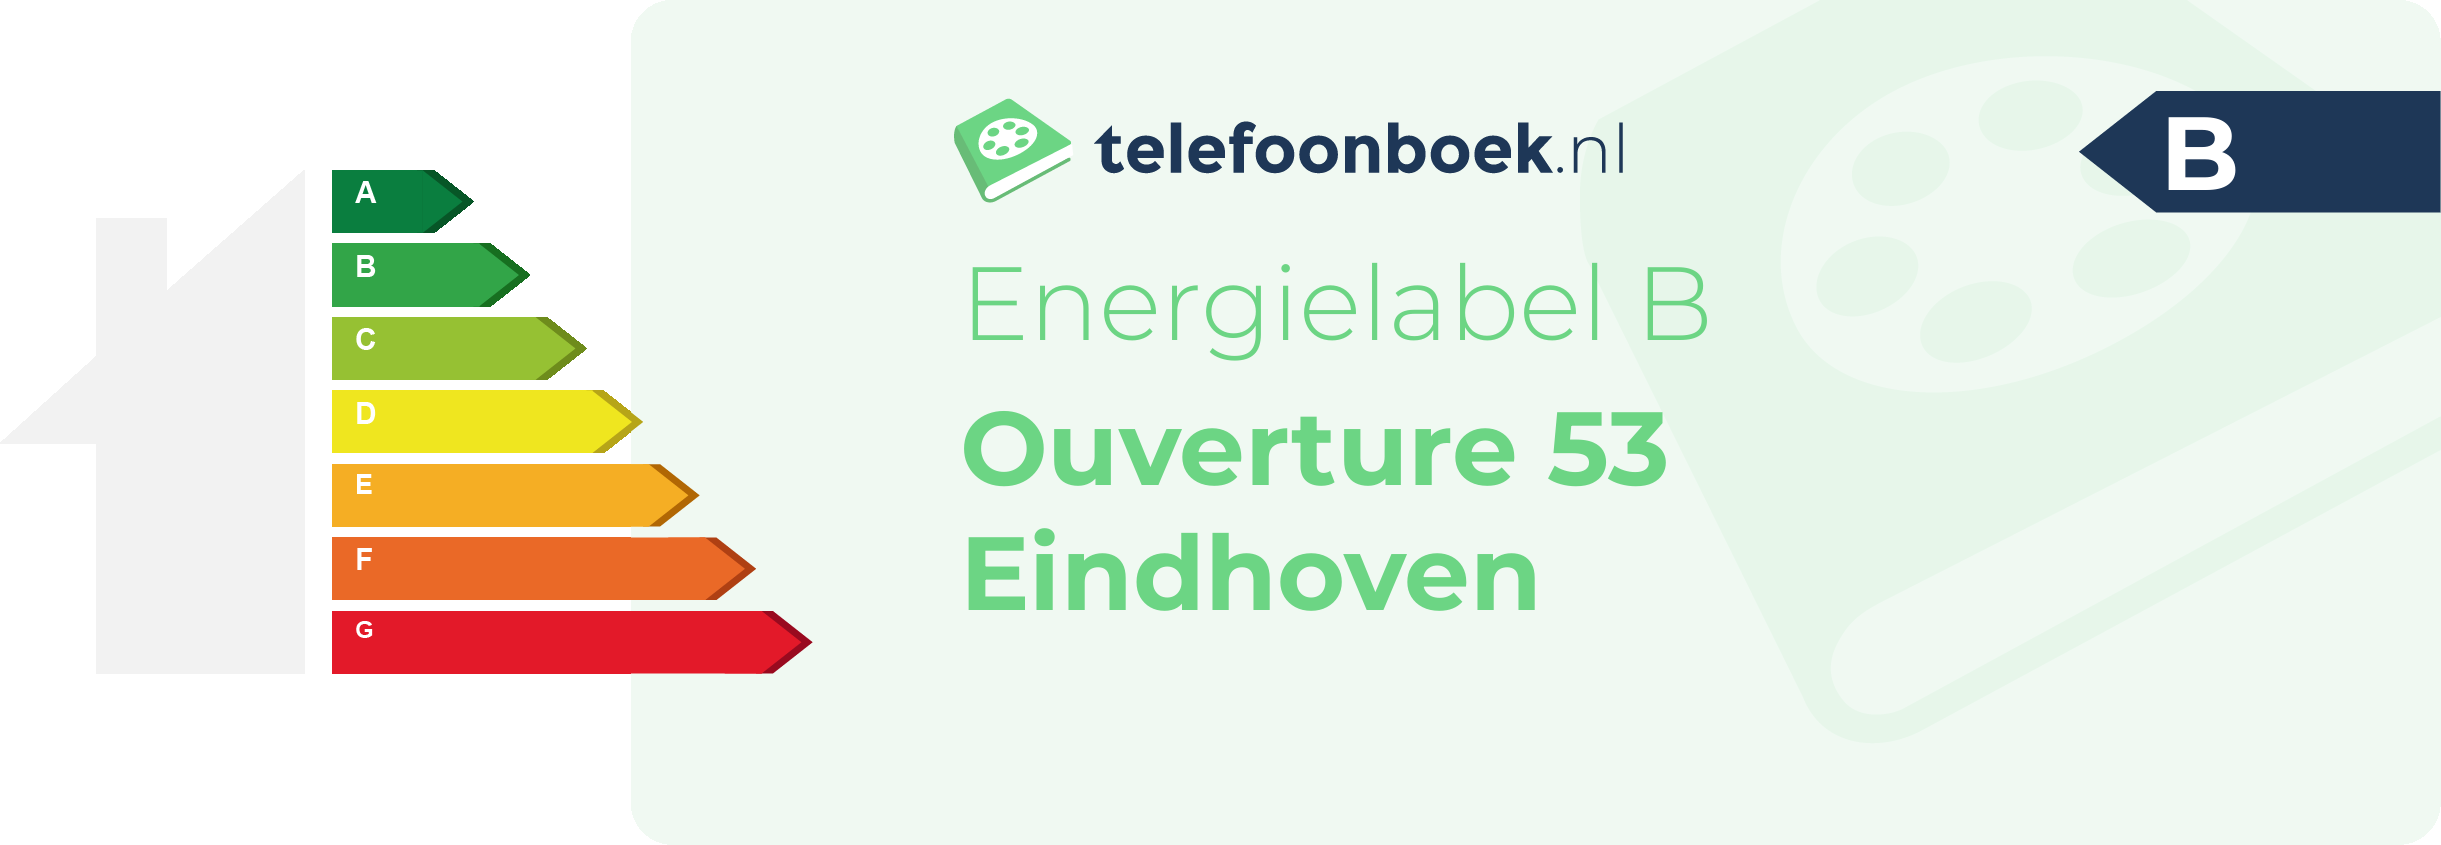 Energielabel Ouverture 53 Eindhoven